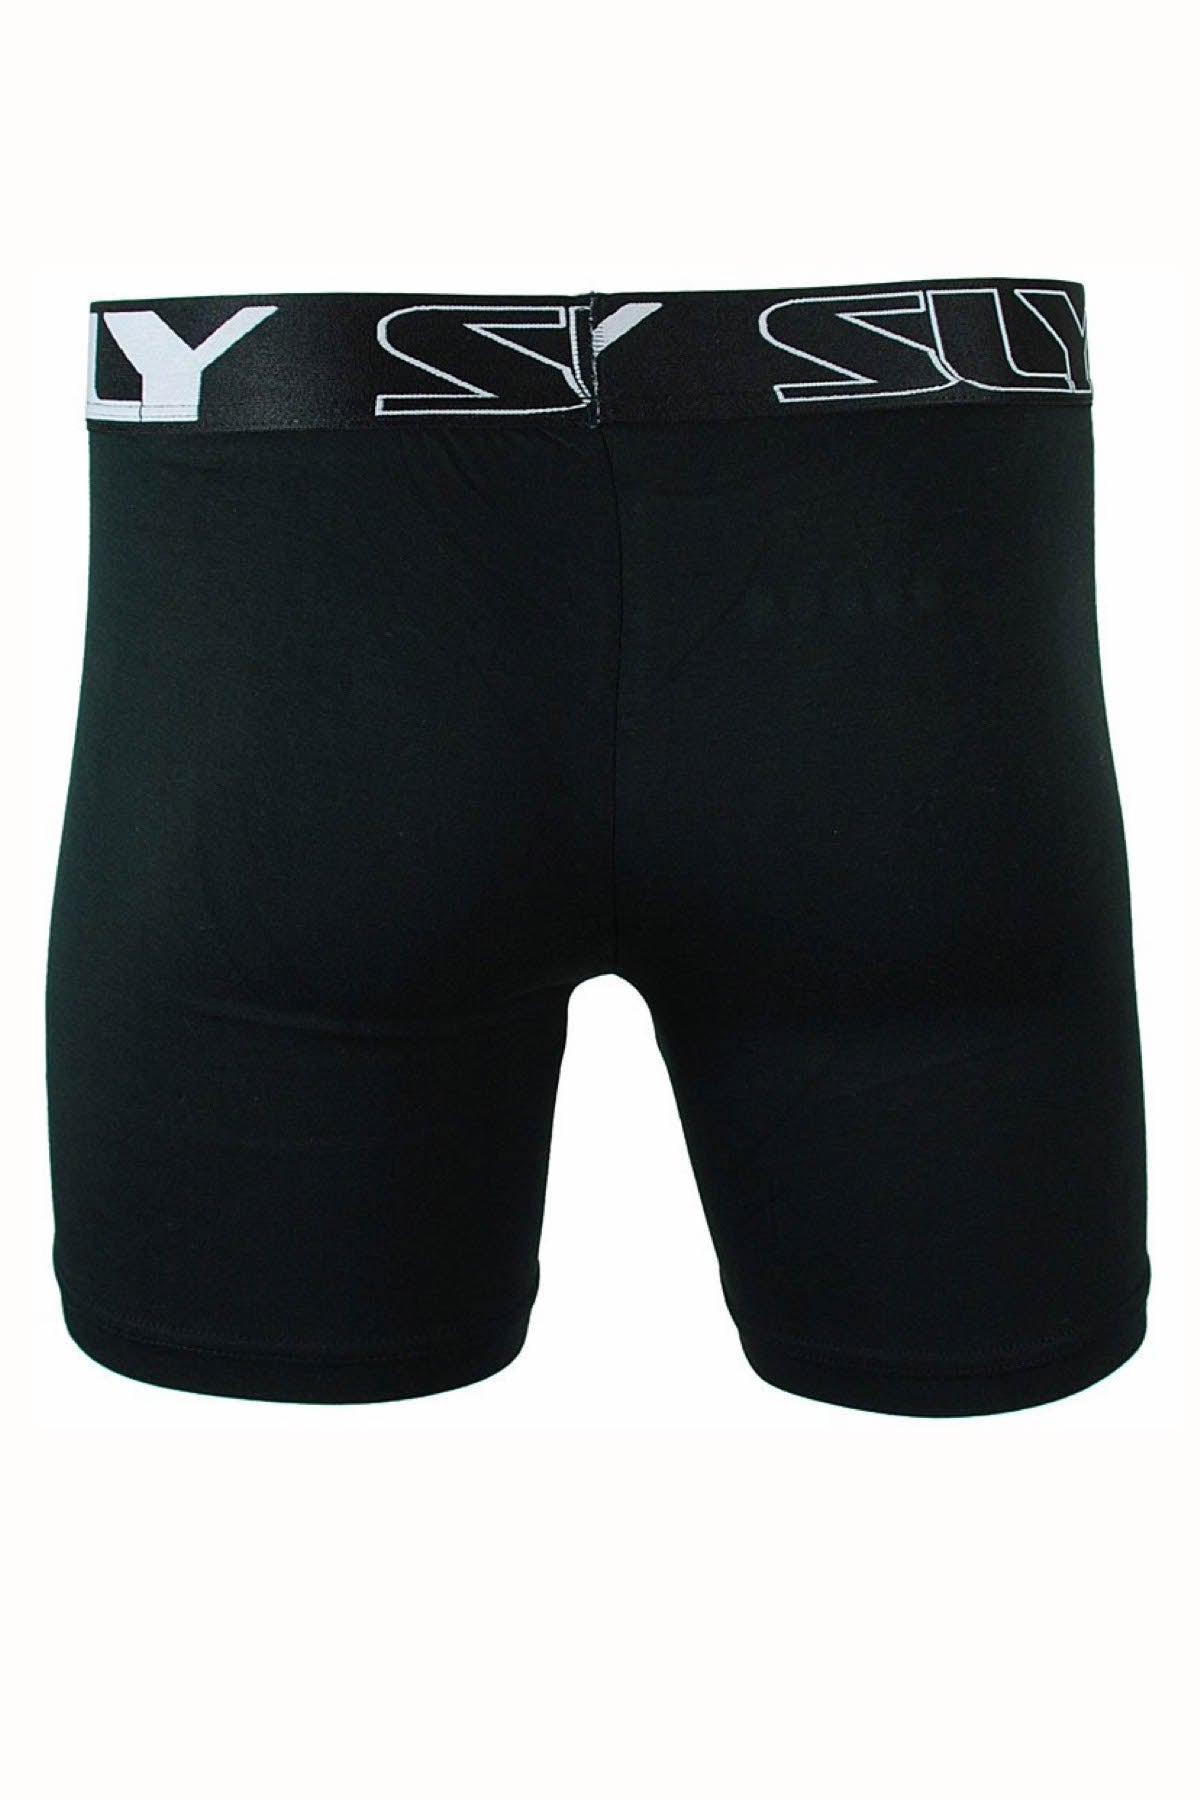 Sly Black Solid Boxer Brief - Long